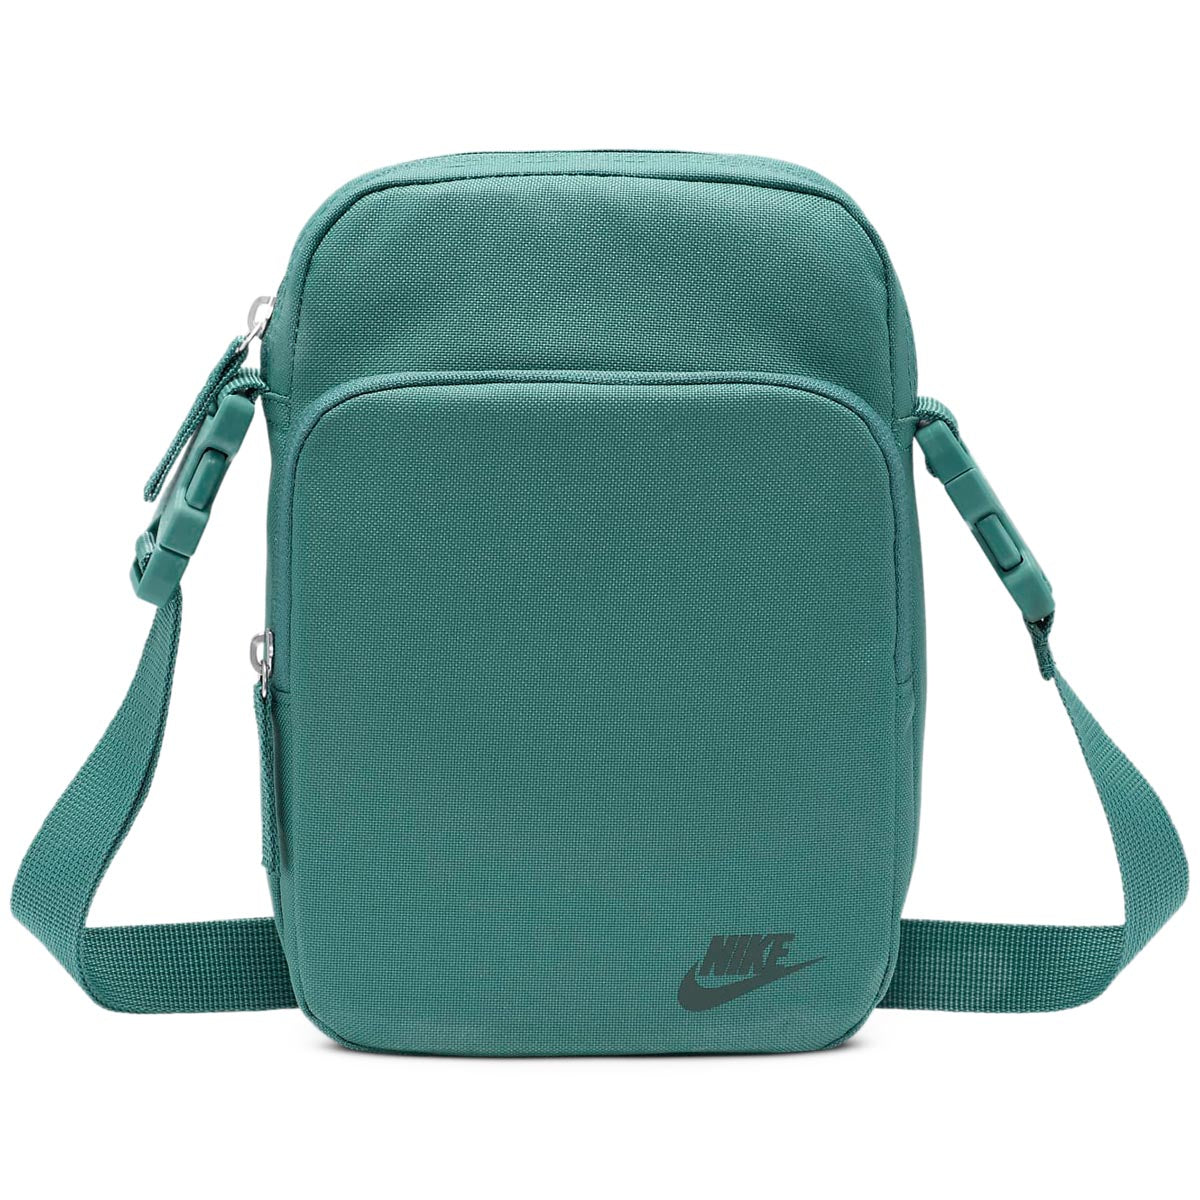 Nike SB Heritage Bag - Bicoastal/Bicoastal/Vintage Green image 1